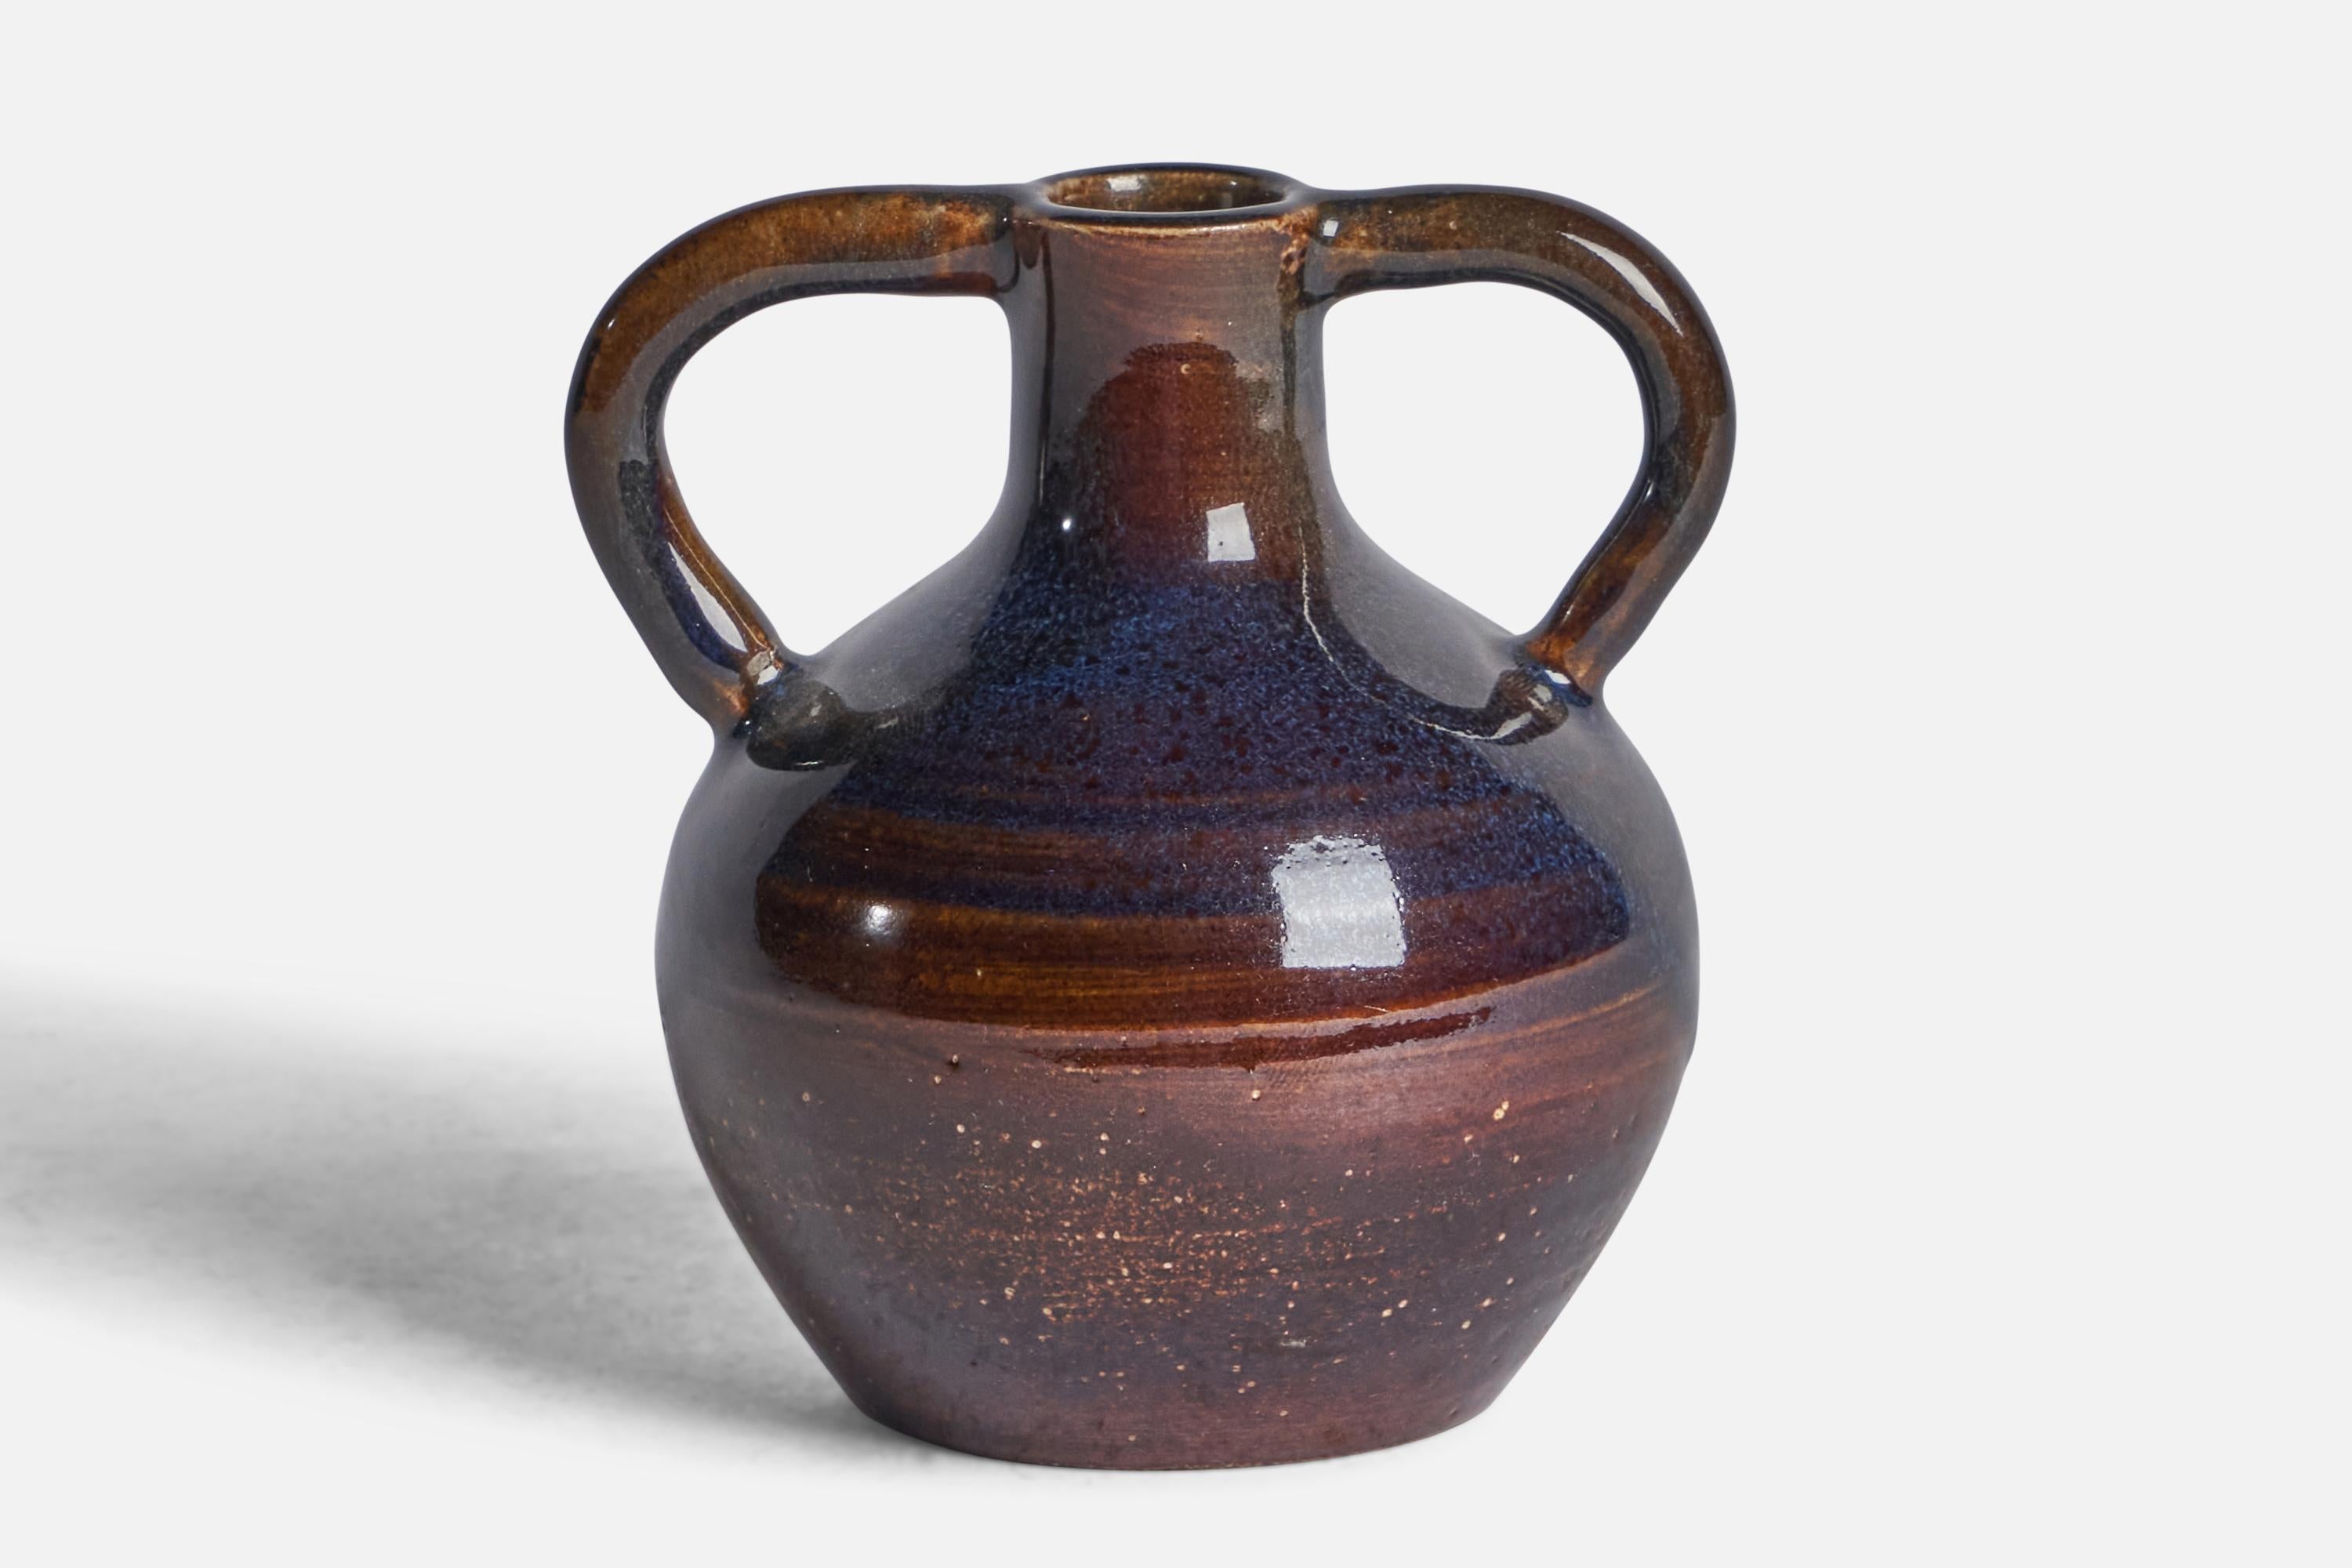 A black and brown-glazed ceramic vase designed and produced in Sweden, c. 1970s.